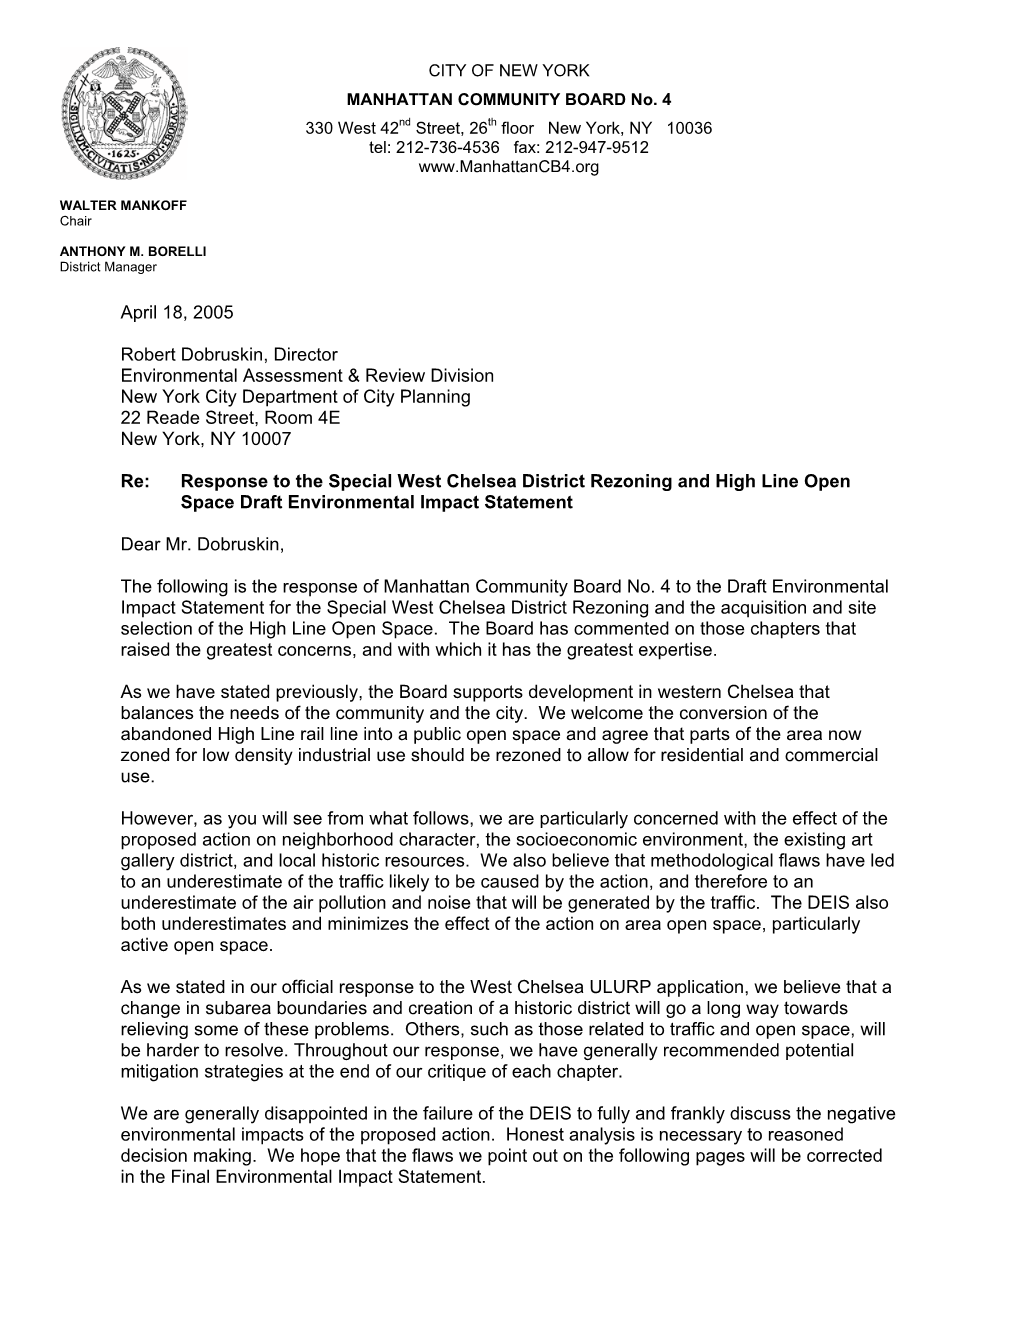 Response to West Chelsea Rezoning Environmental Impact Statement